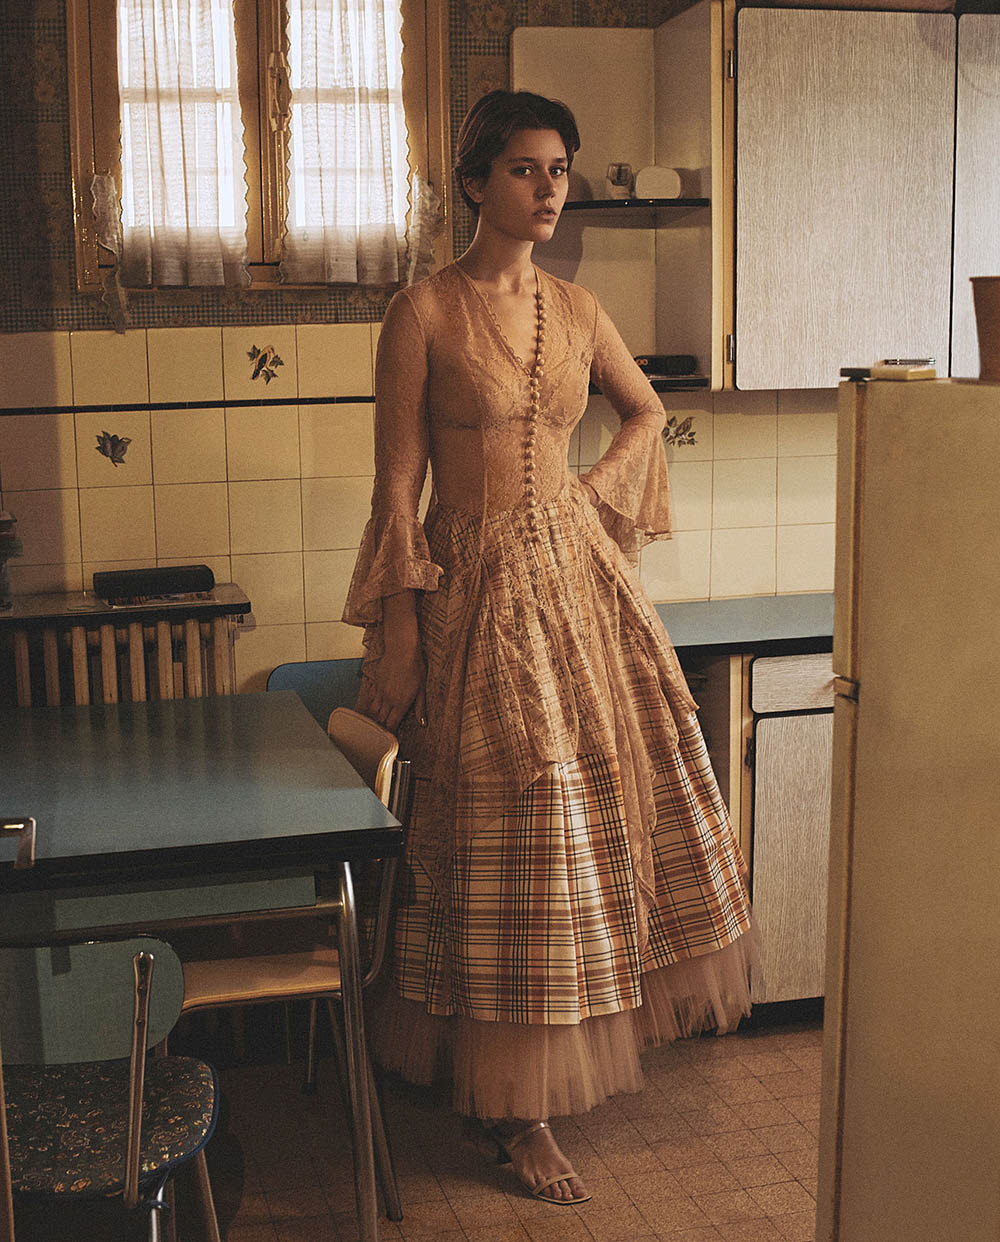 Vivienne Rohner by Van Mossevelde + N for Vogue Russia May 2020